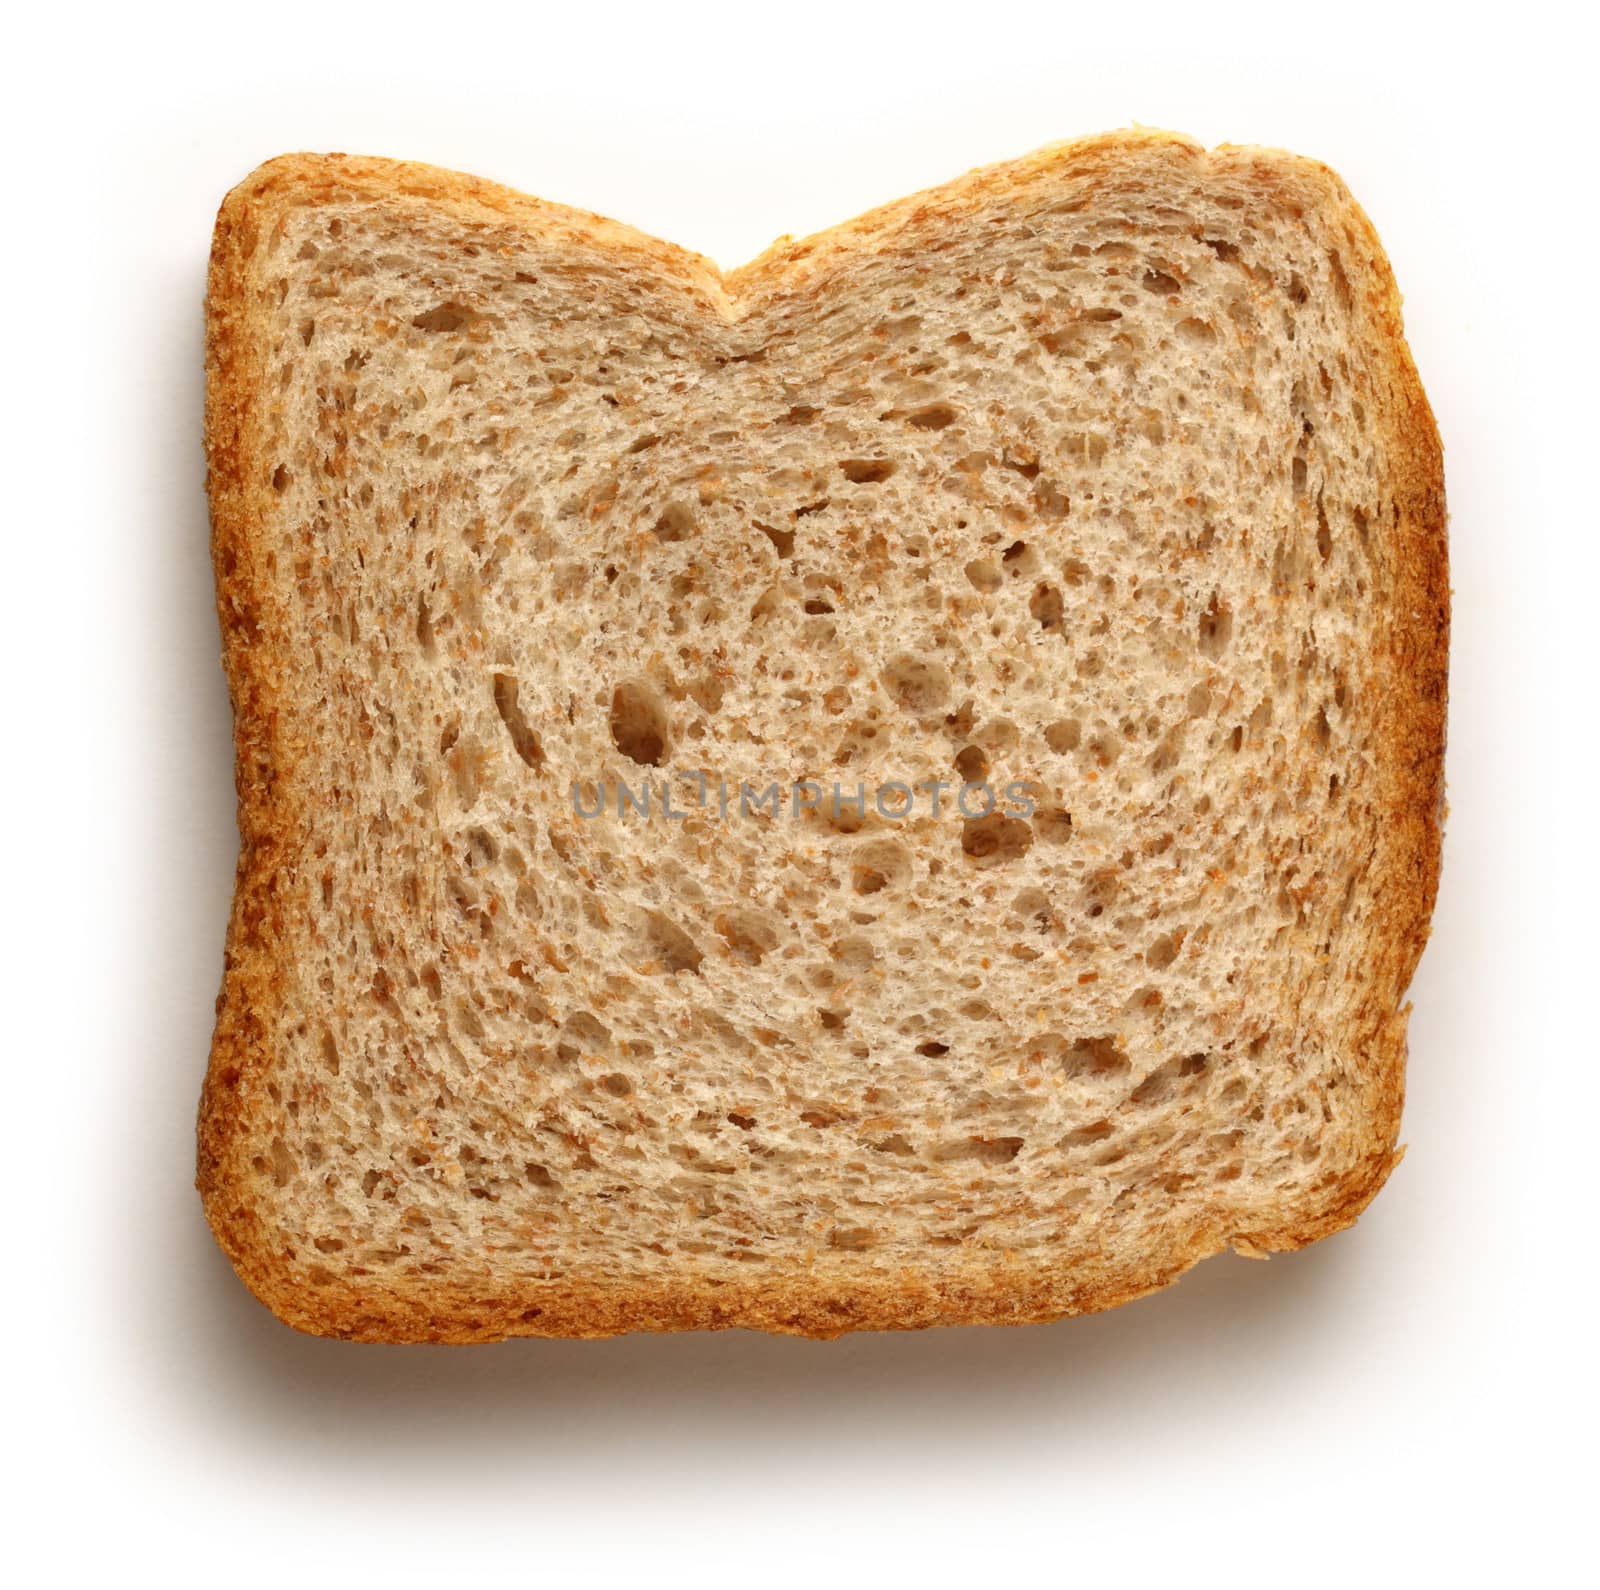 Bread slice on white background